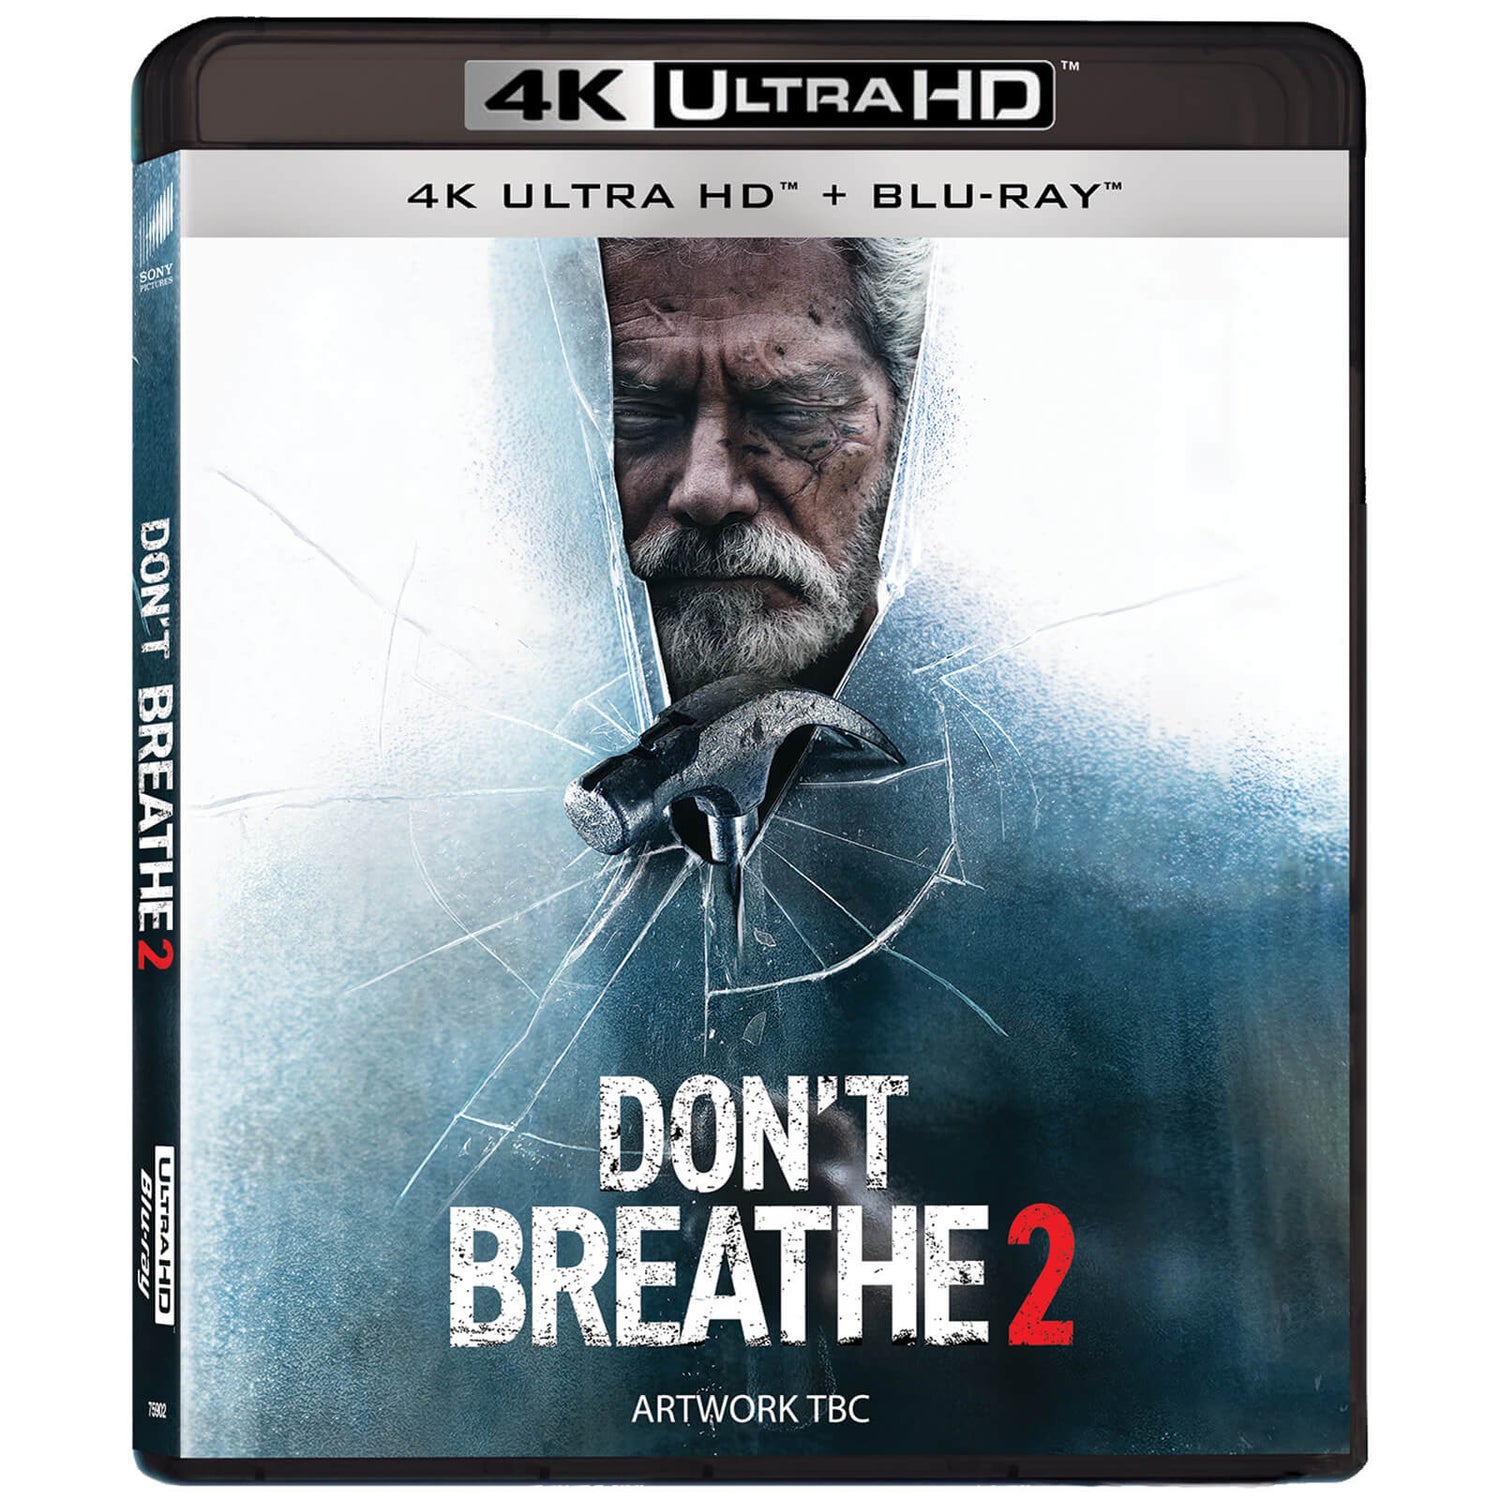 DON'T BREATHE 2 (2 DISCS - 4K Ultra HD & Blu-ray)